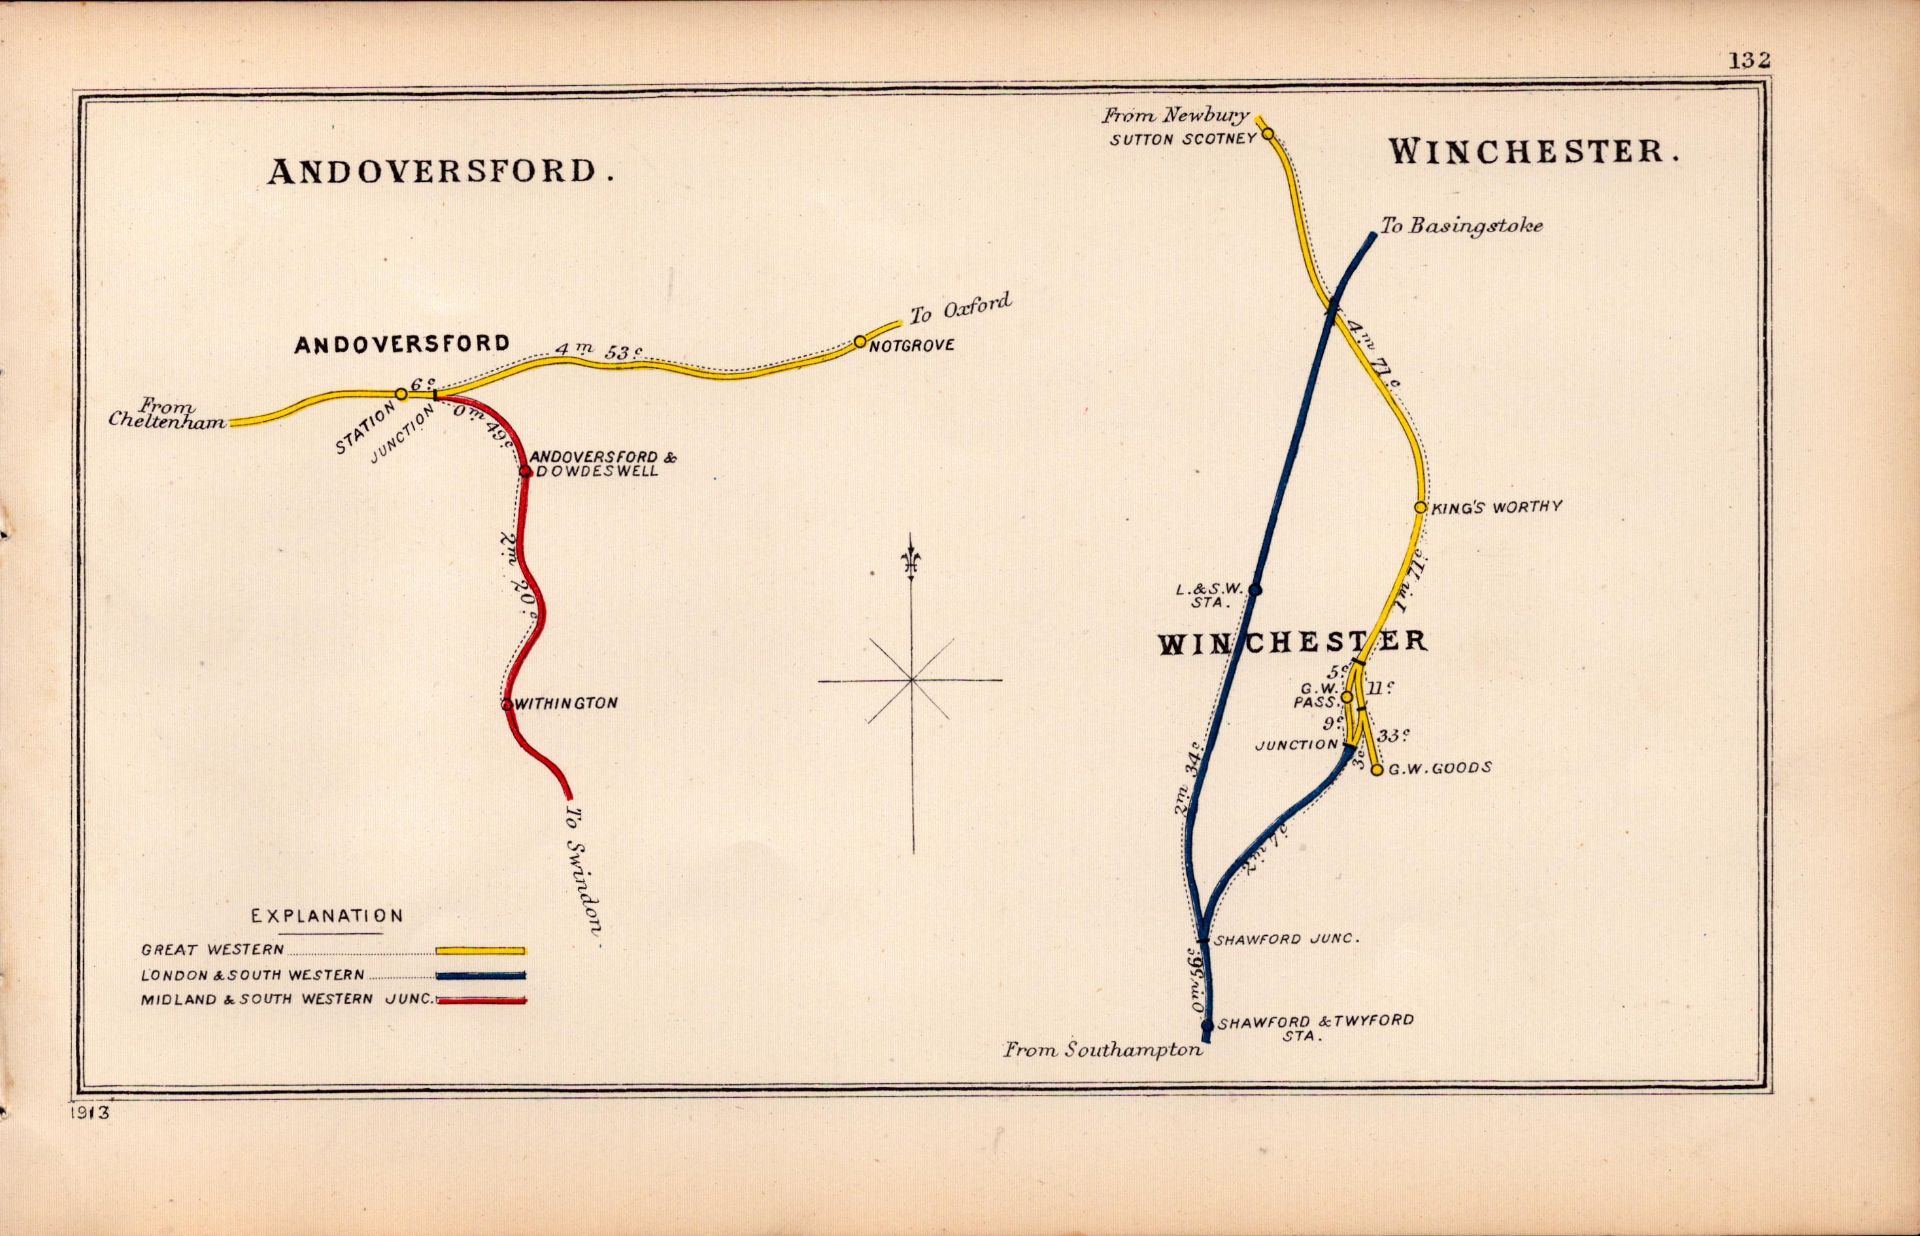 Andoversford Glos / Winchester Hampshire Antique Railway Diagram-132.